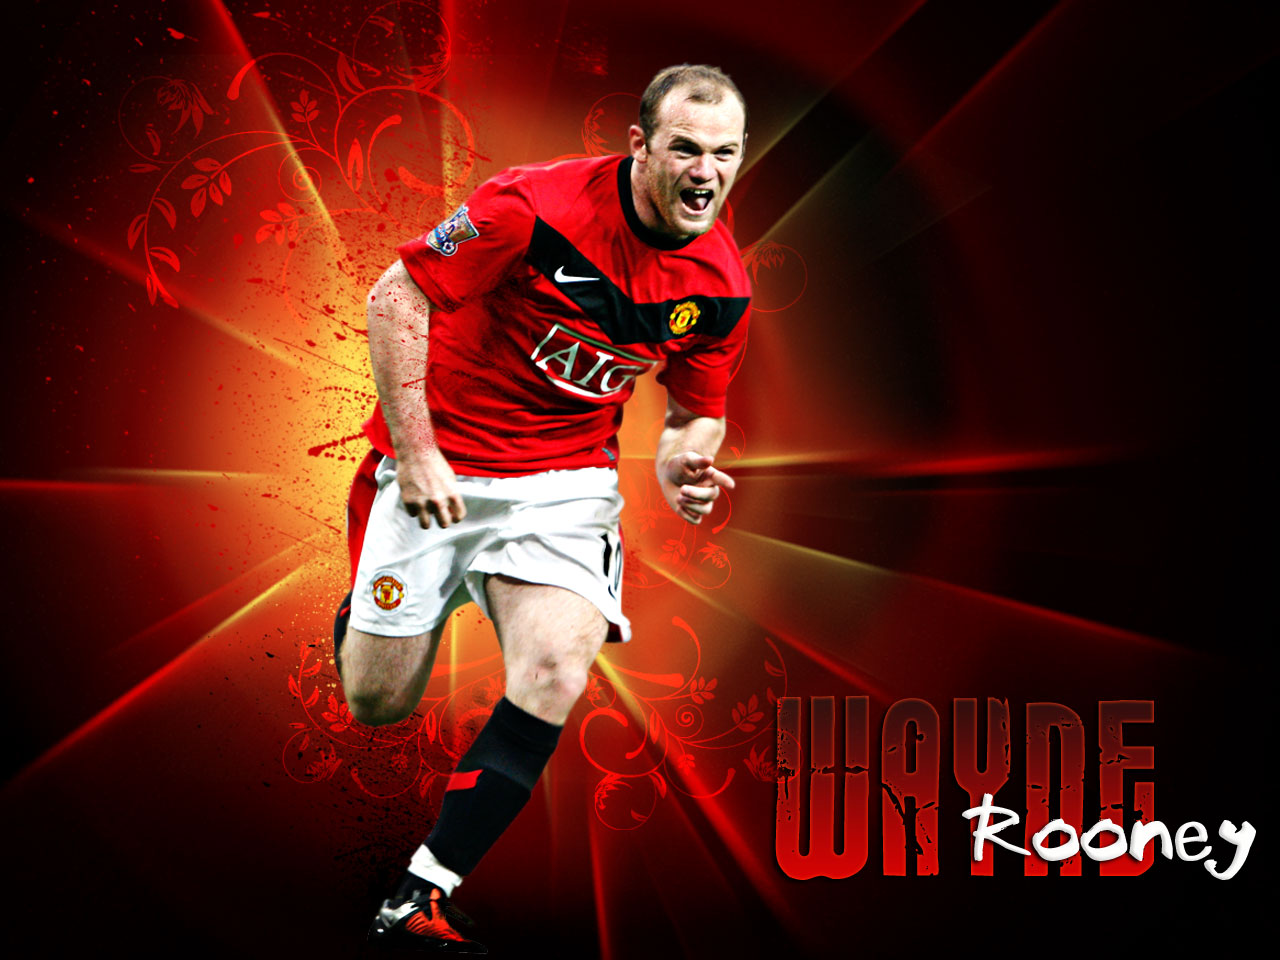 Free wallpapers: Wayne Rooney wallpaper|Free download Wayne Rooney ...